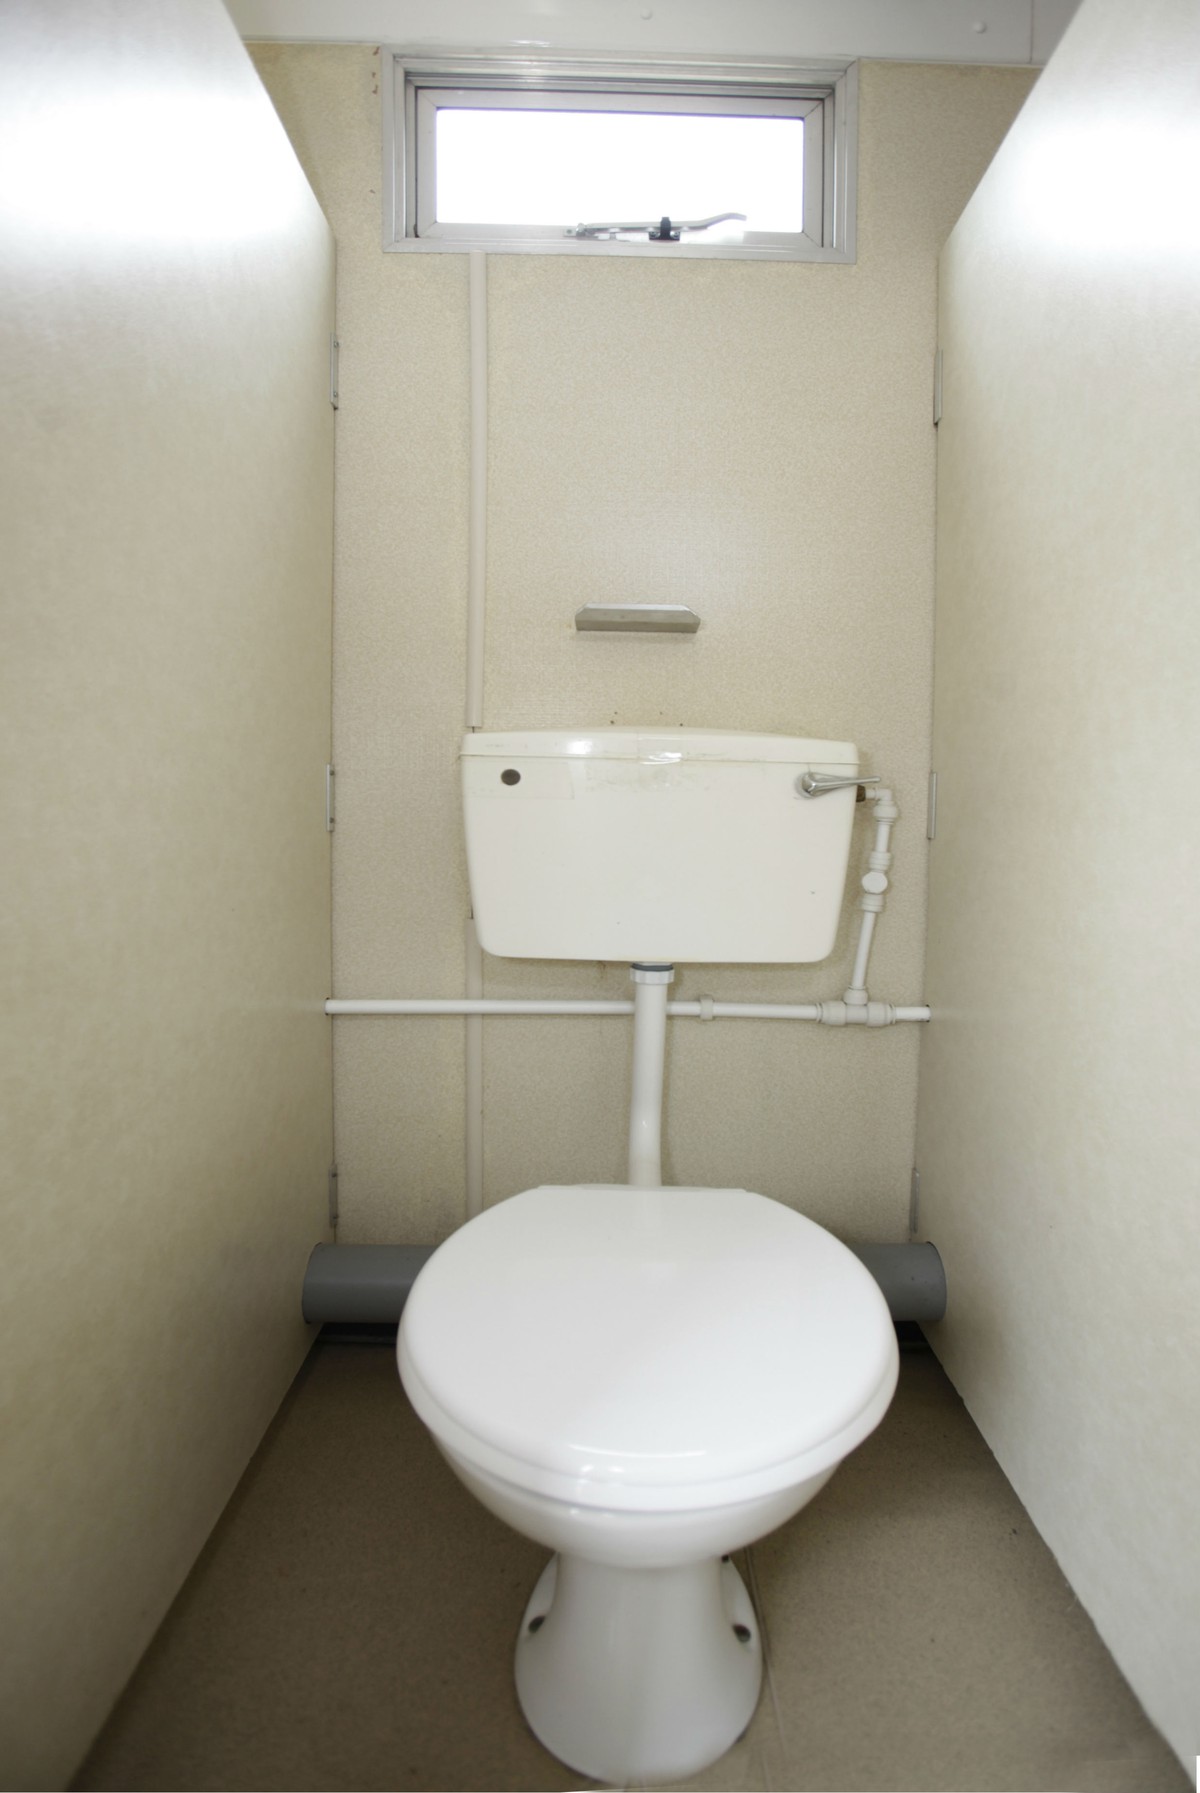 Secondhand Toilet Units 4 3 Toilet Trailers 4 3 Toilet Trailer Or